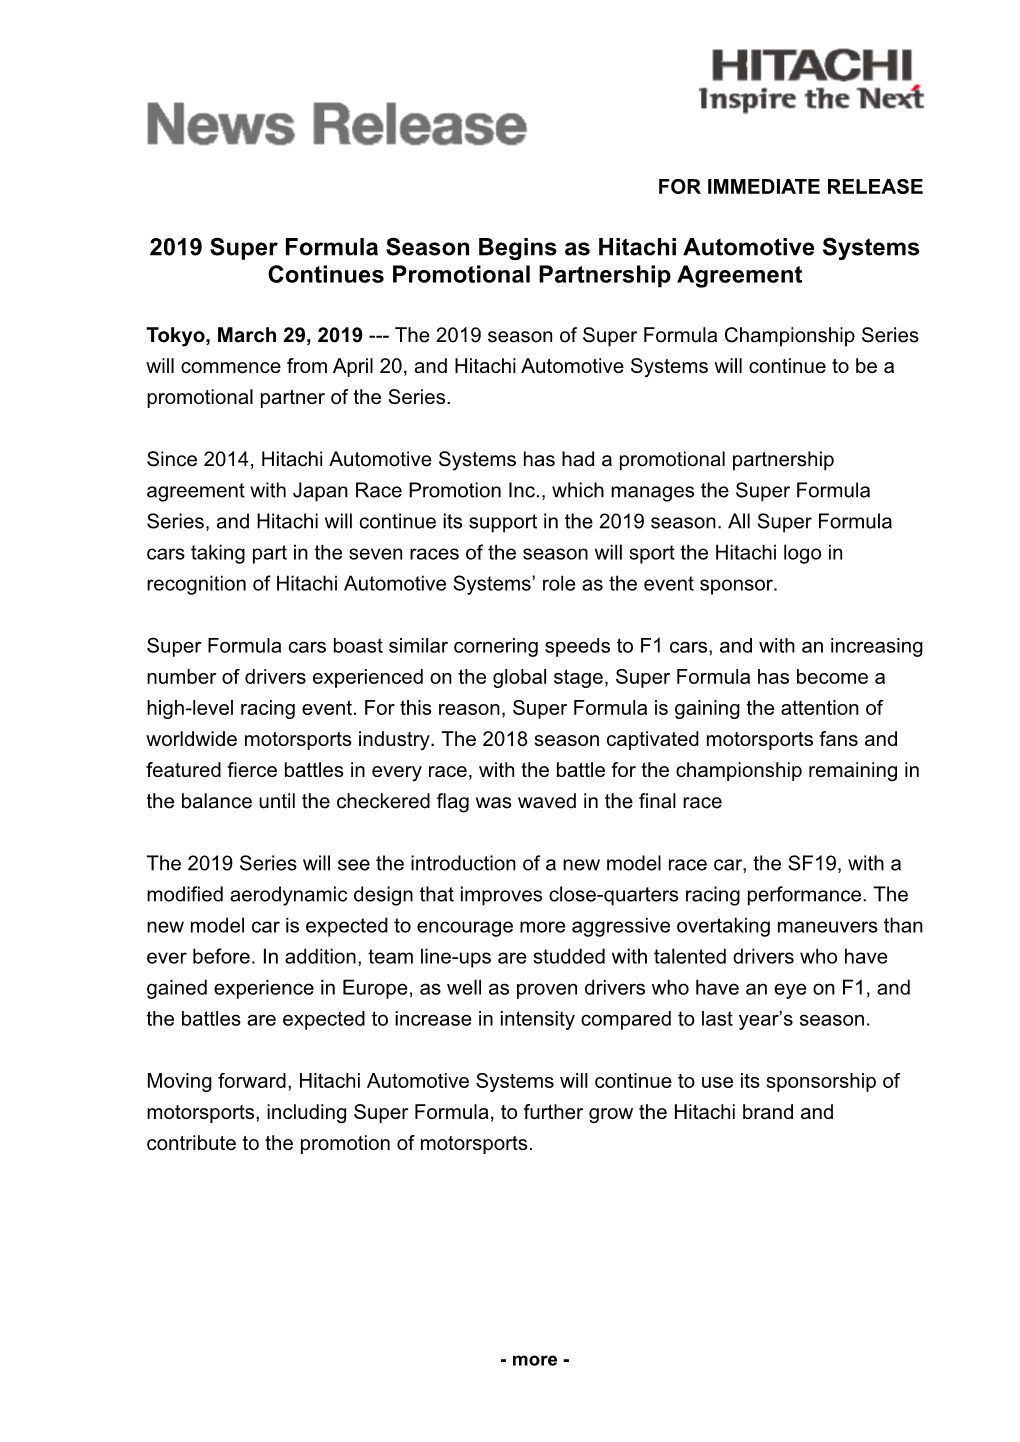 2019 Super Formula Season Begins As Hitachi Automotive Systems Continues Promotional Partnership Agreement